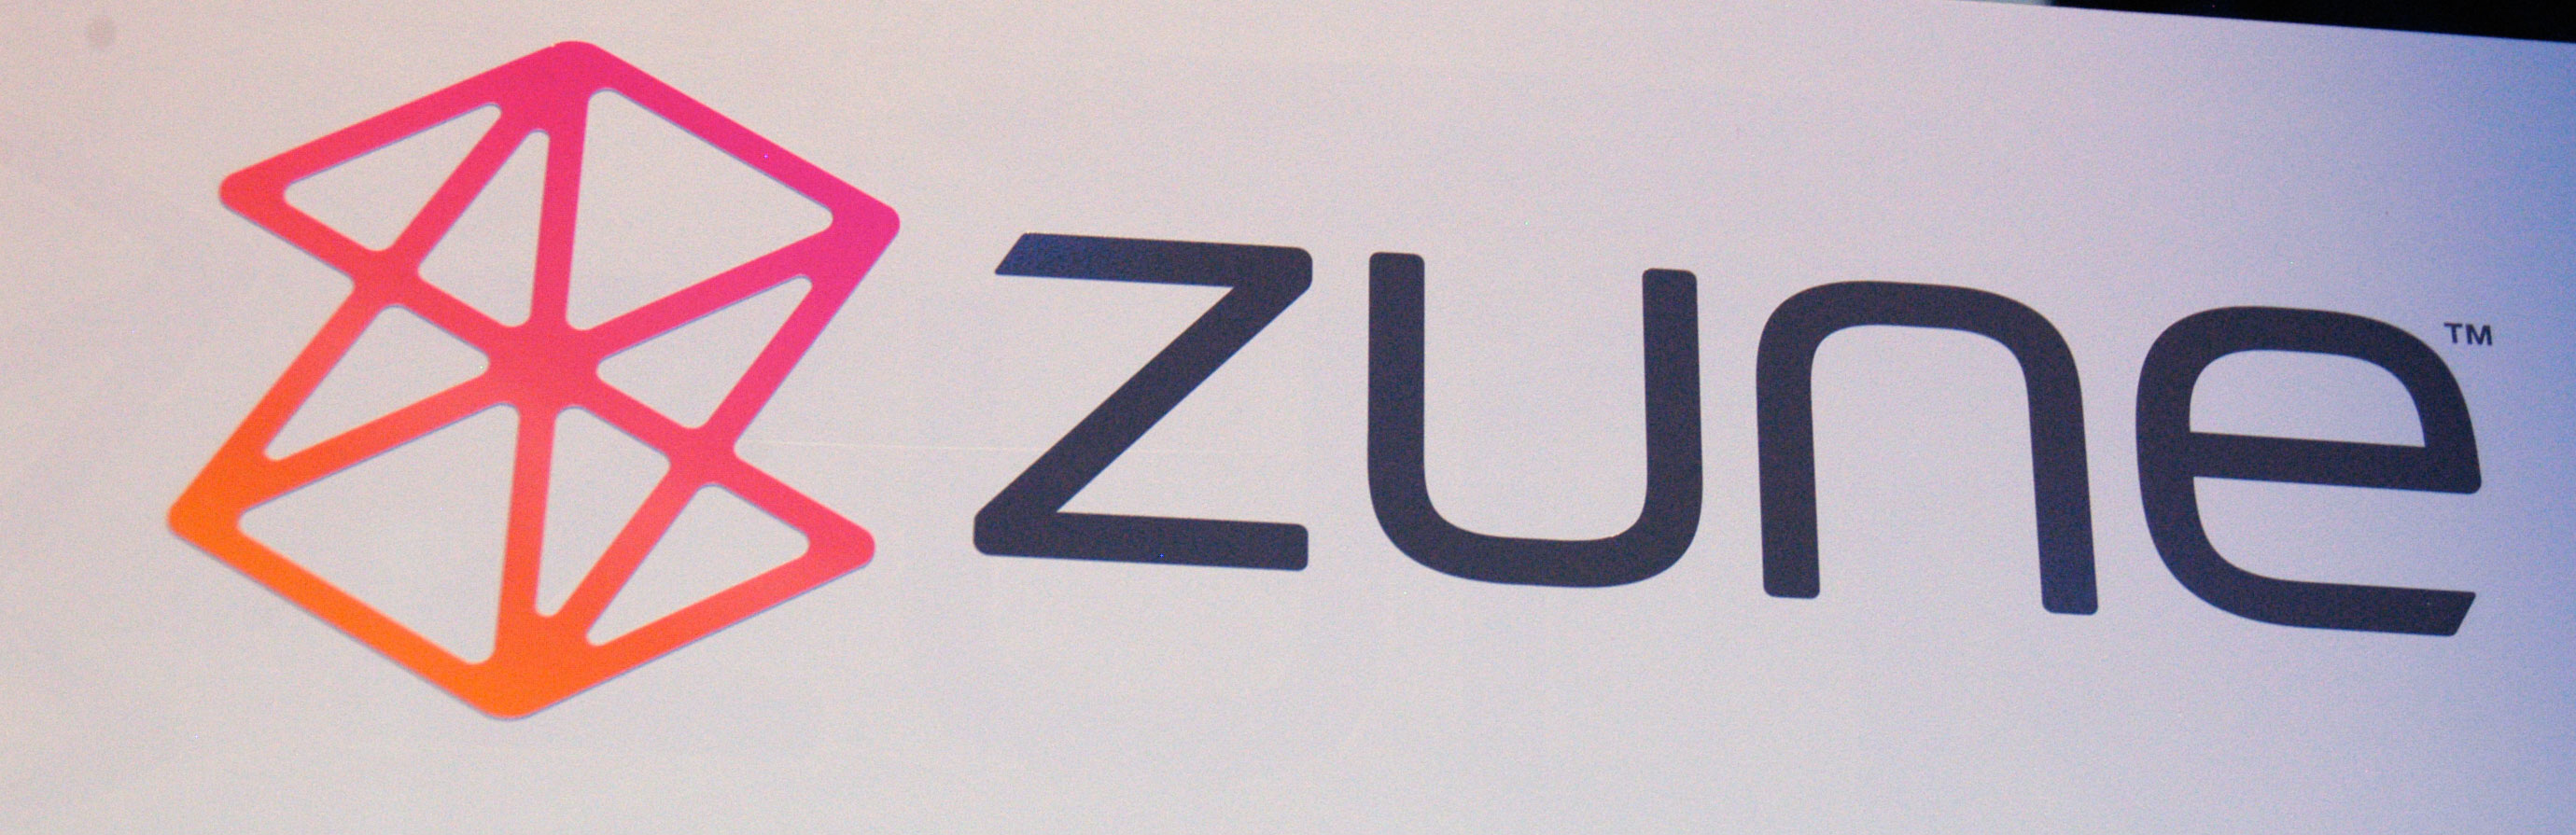 Microsoft finally calls Zune out